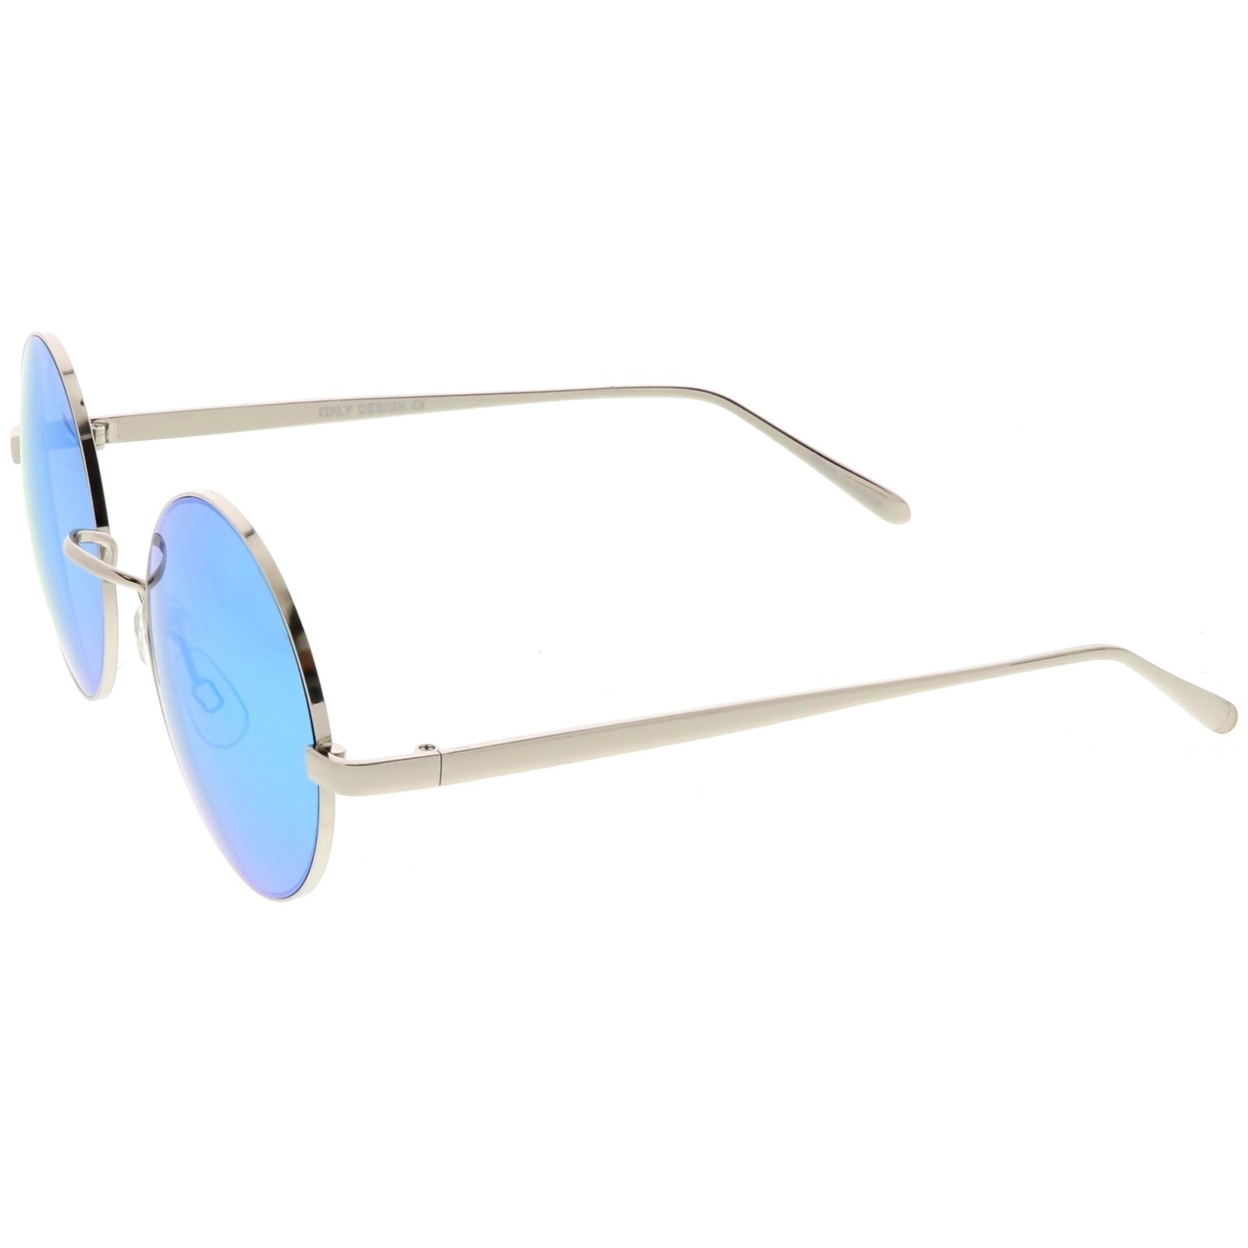 Premium Retro Round Sunglasses With Metal Frame Slim Arms Colored Mirror Lens 52mm - Gold / Orange Mirror